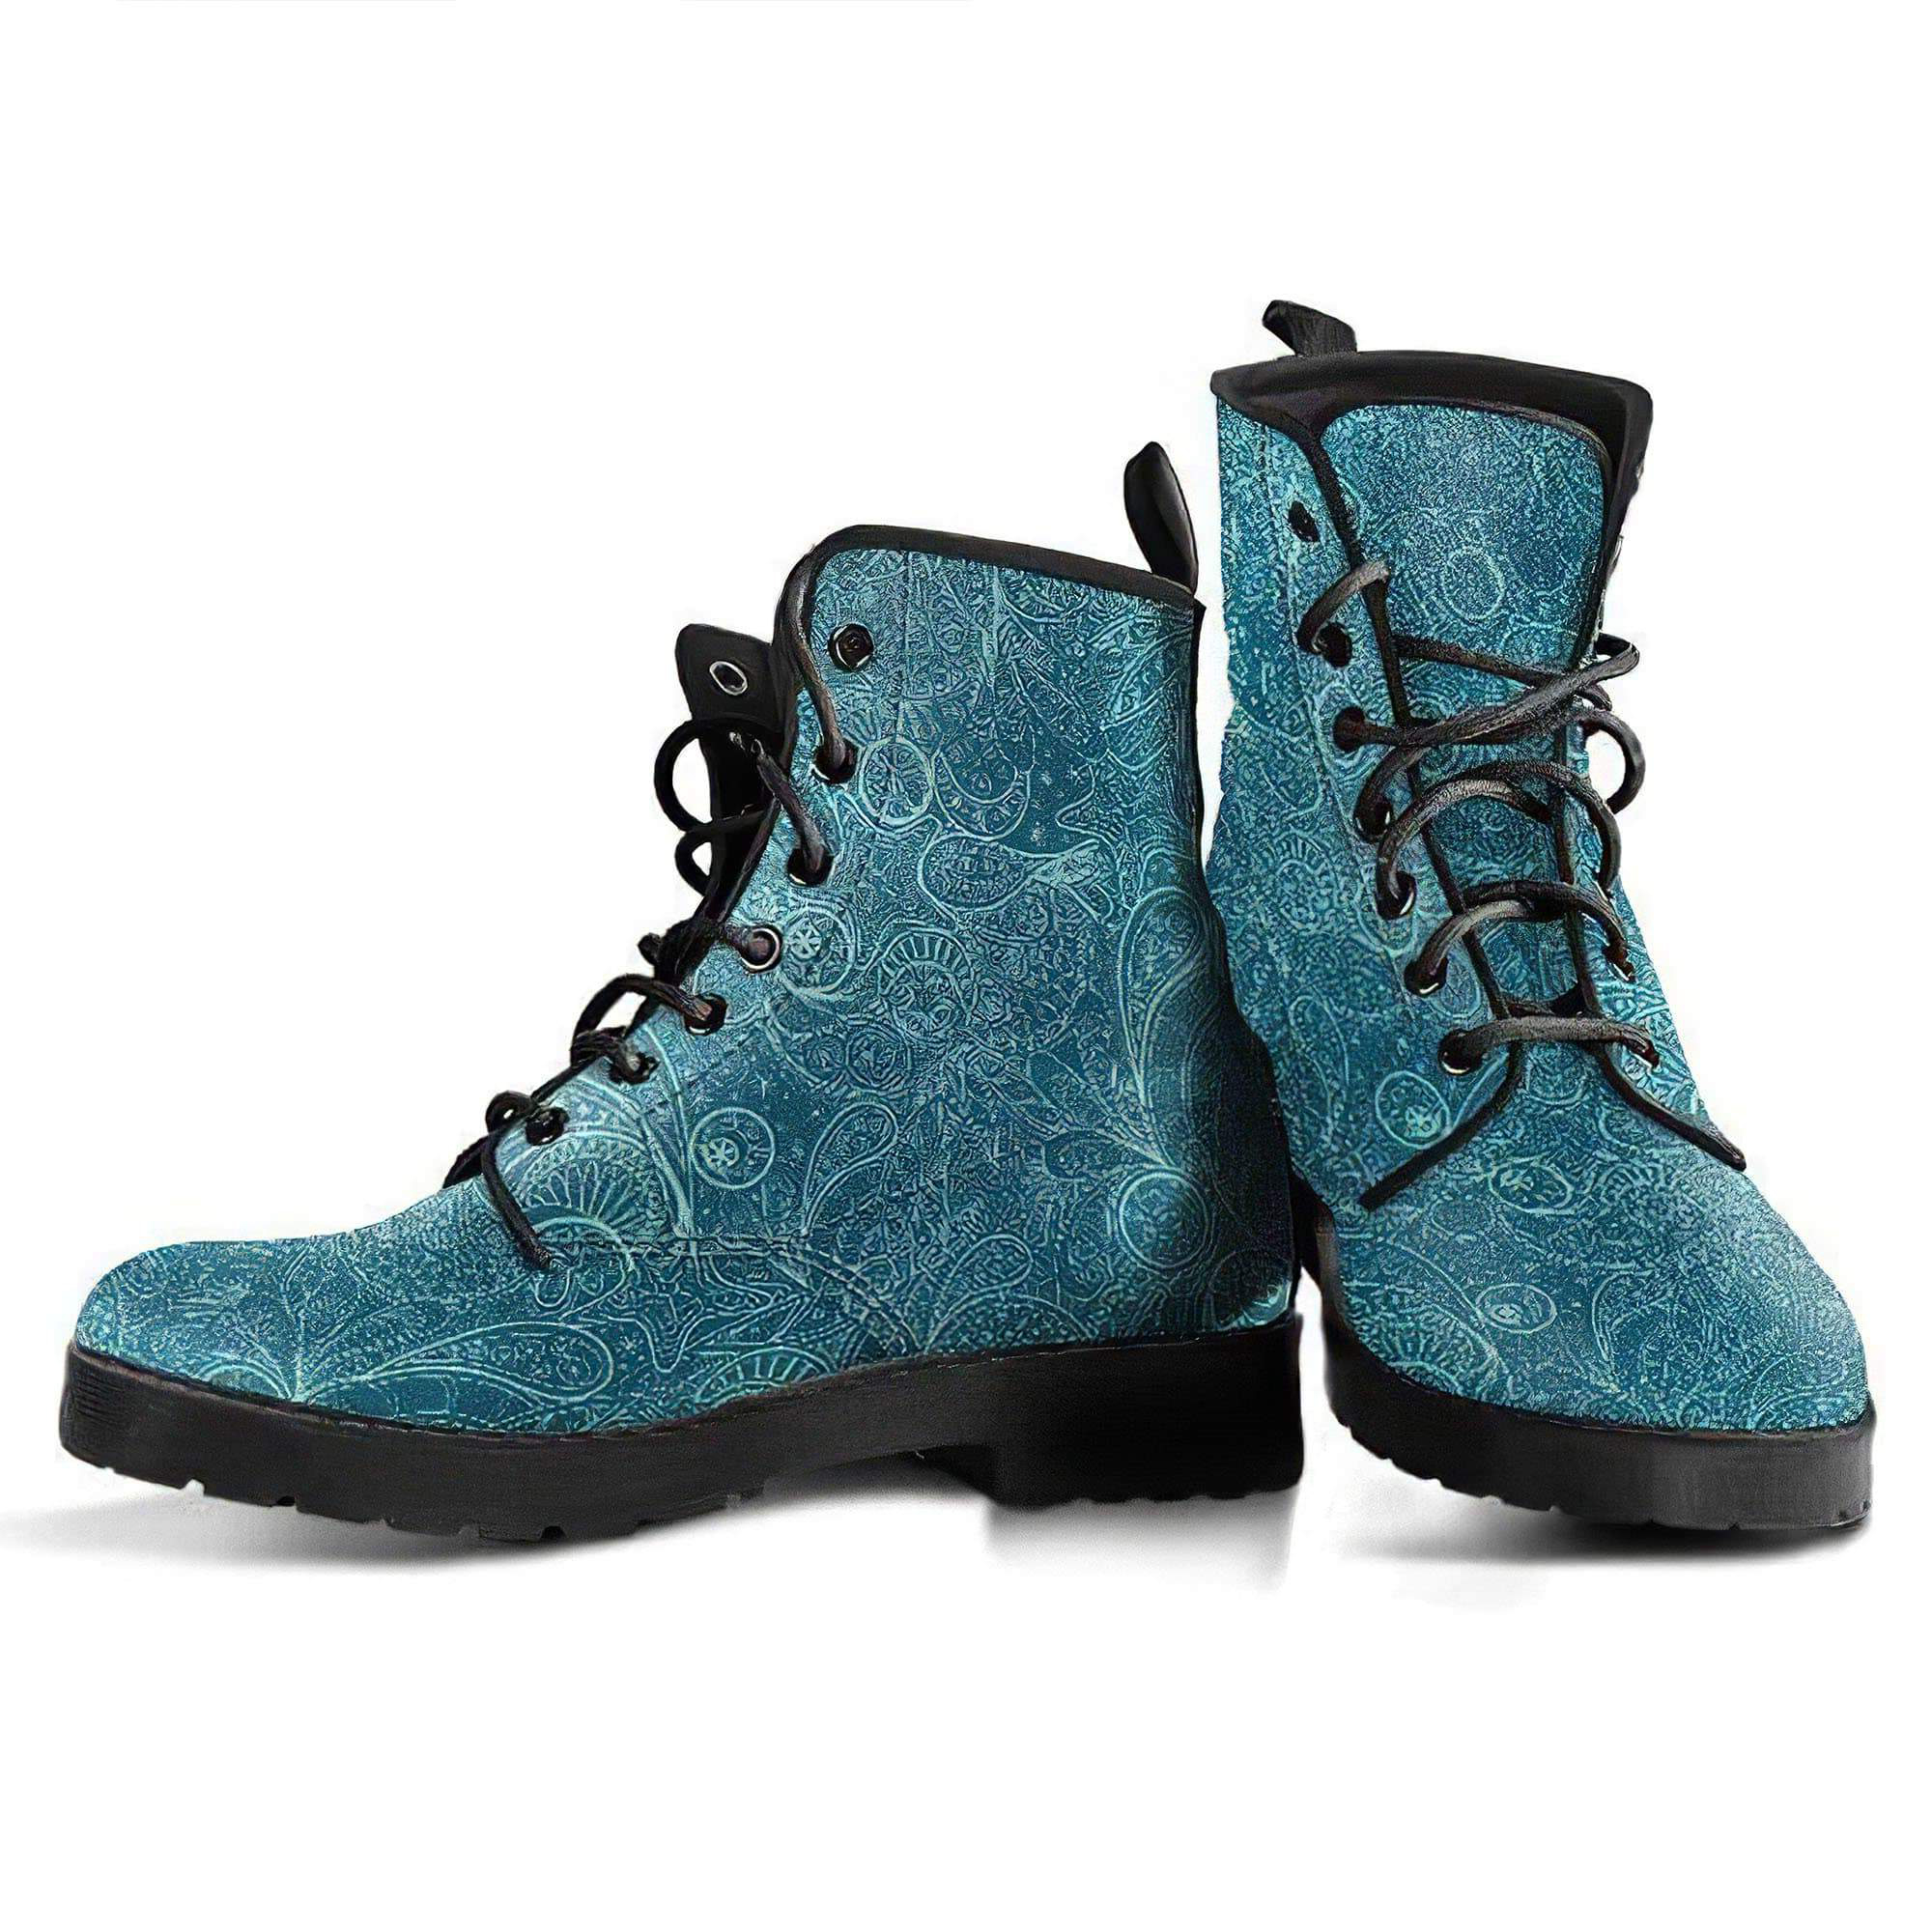 zen-2-handcrafted-boots-women-s-leather-boots-12051989266493.jpg